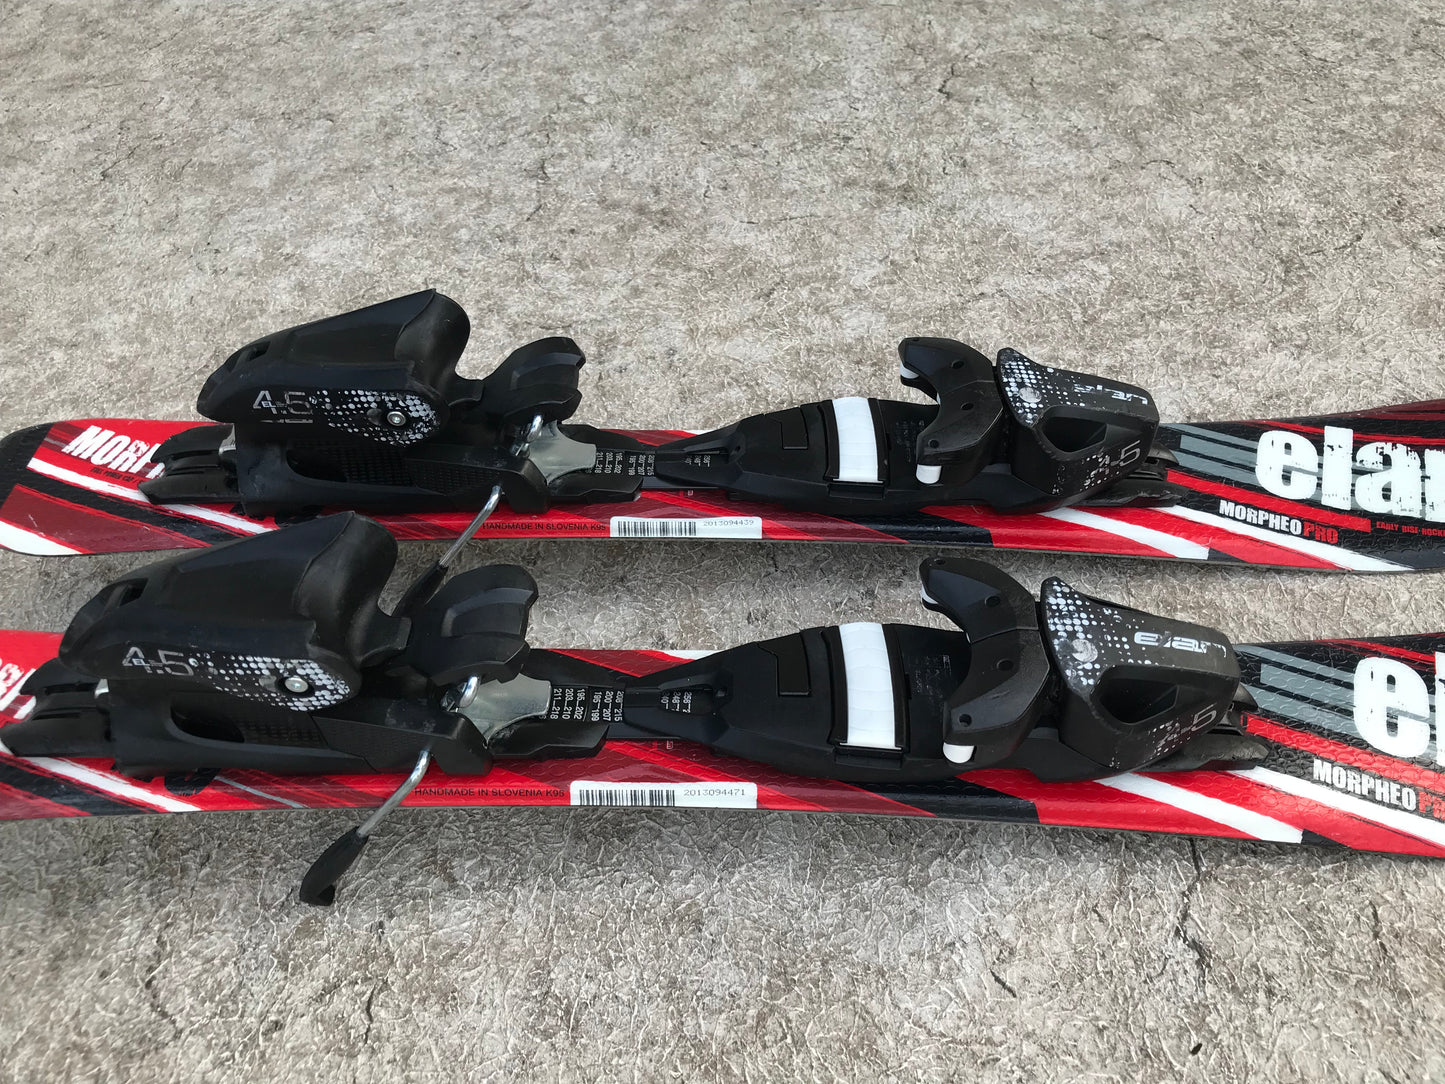 Ski 070 Elan Pro Toddler Size Red Black Parabolic With Bindings Excellent